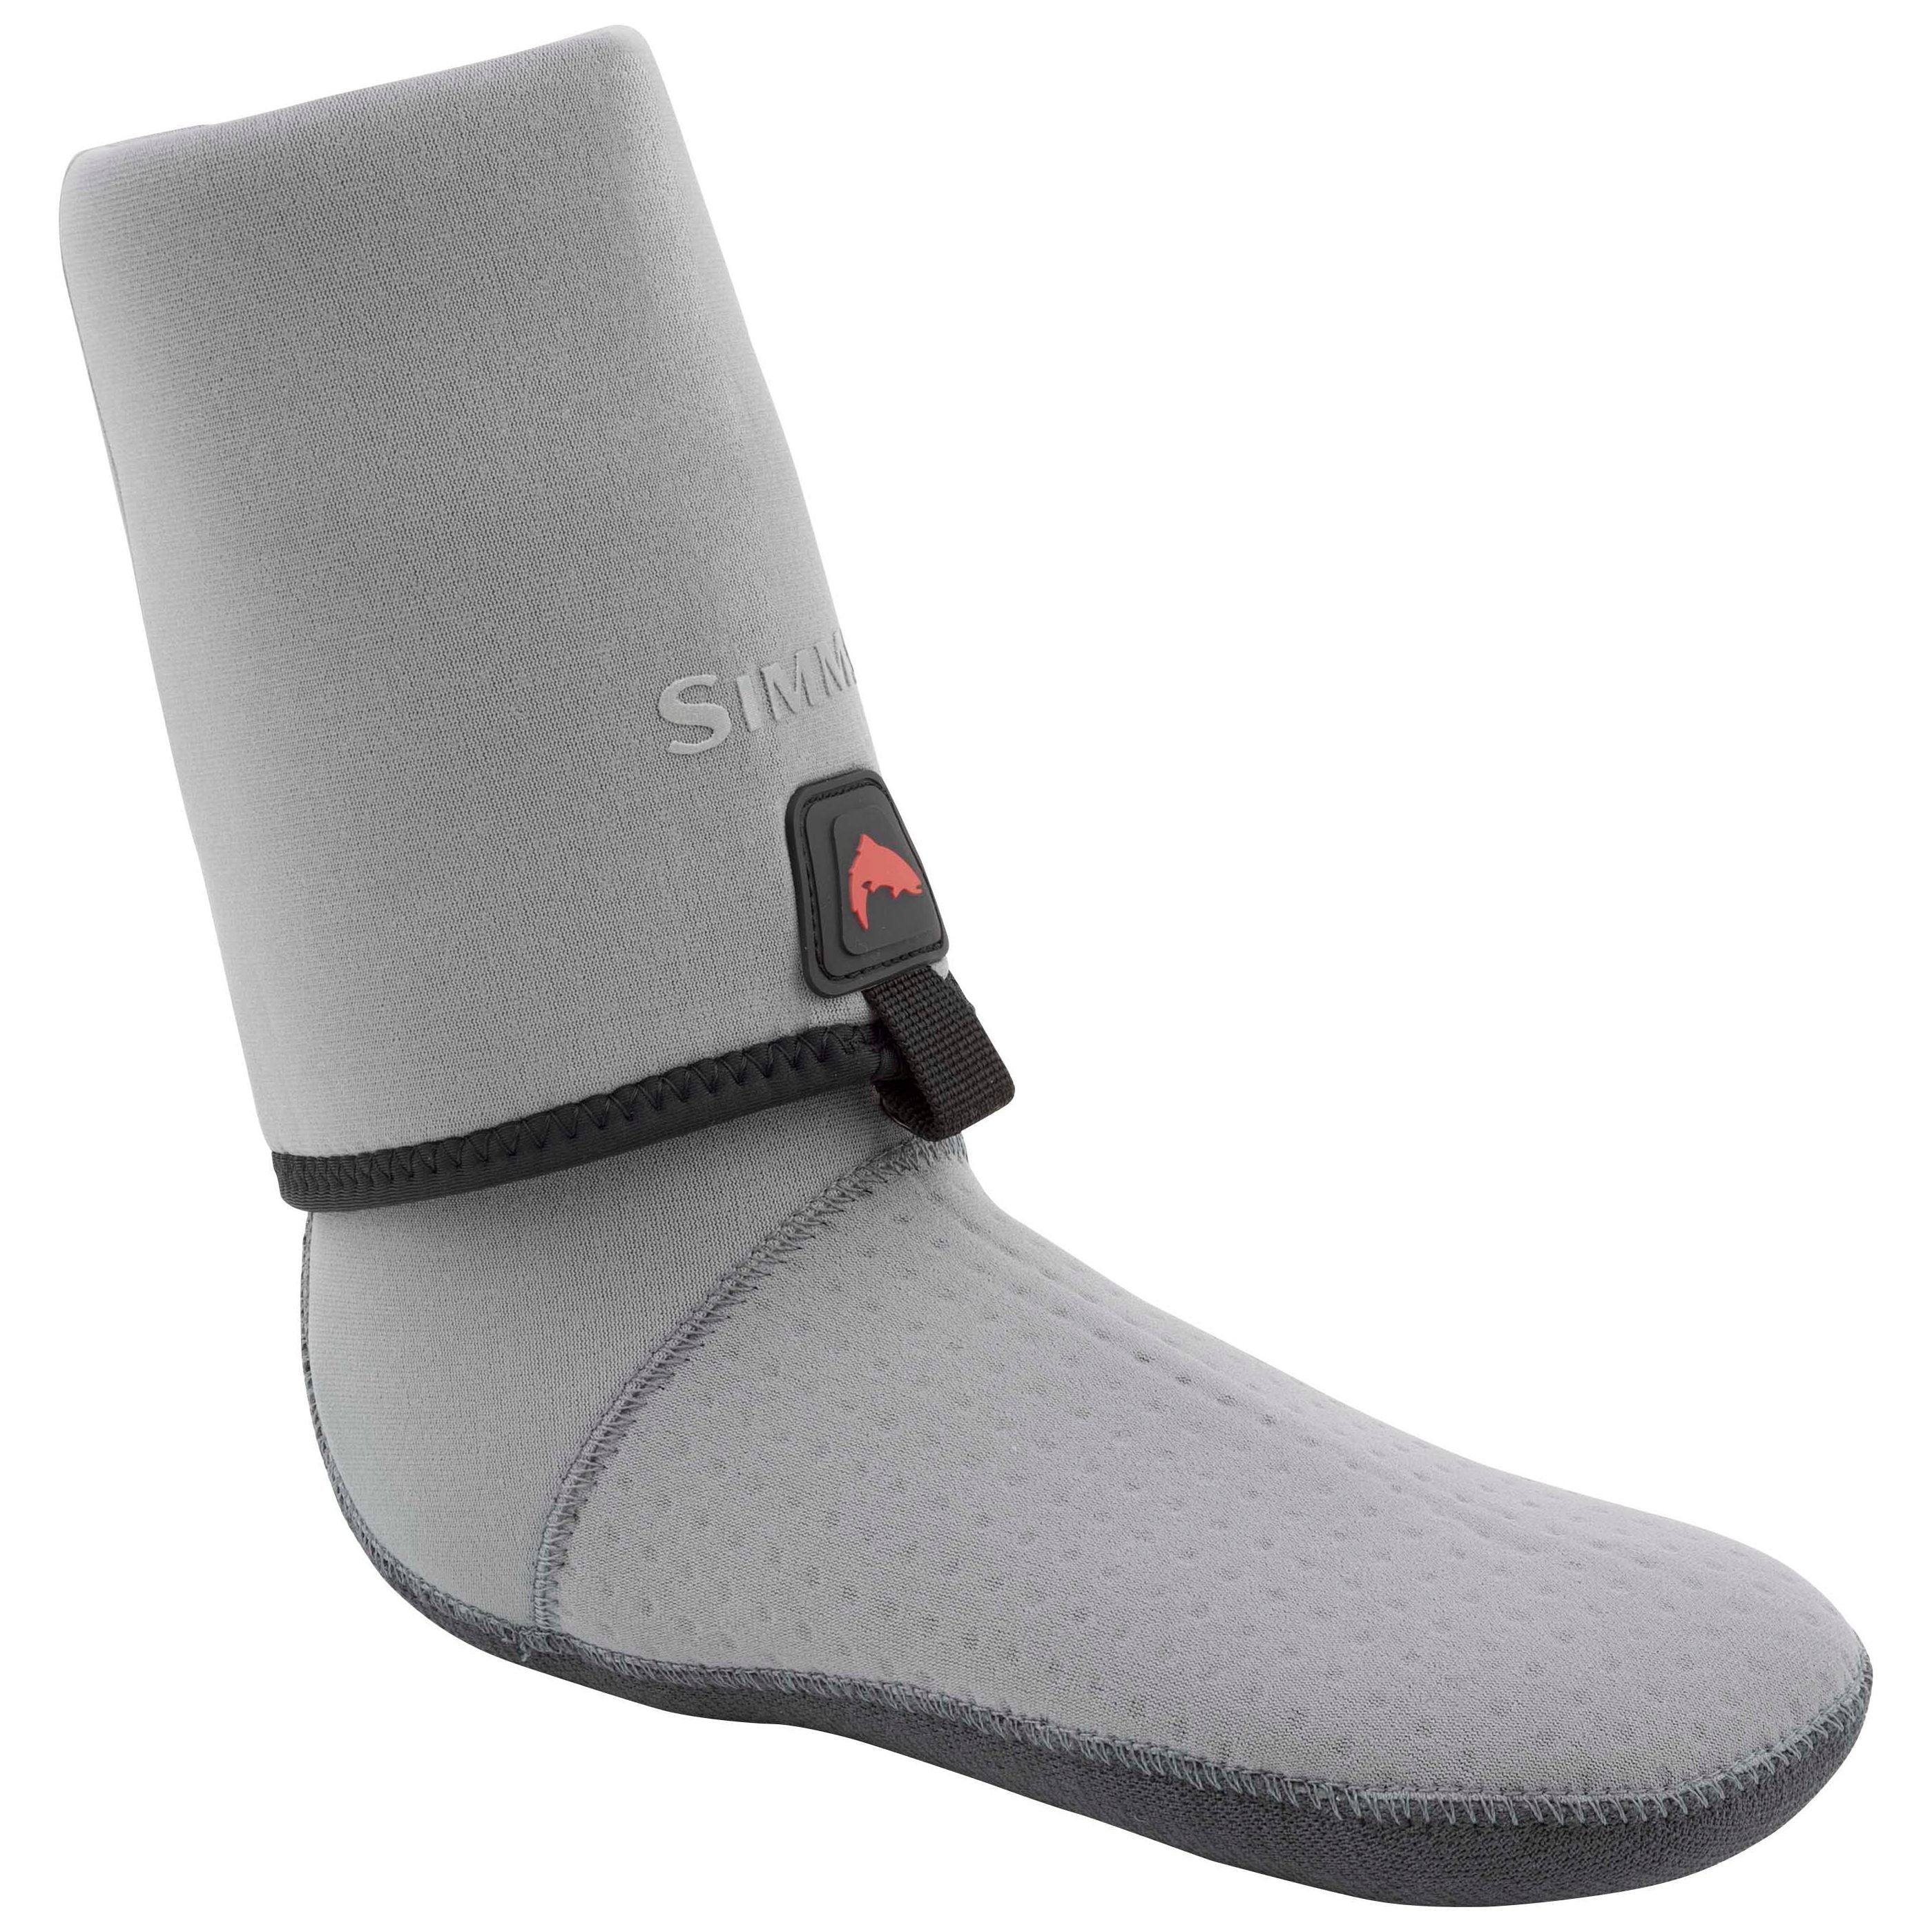 Simms Guide Guard Socks Pewter Image 1